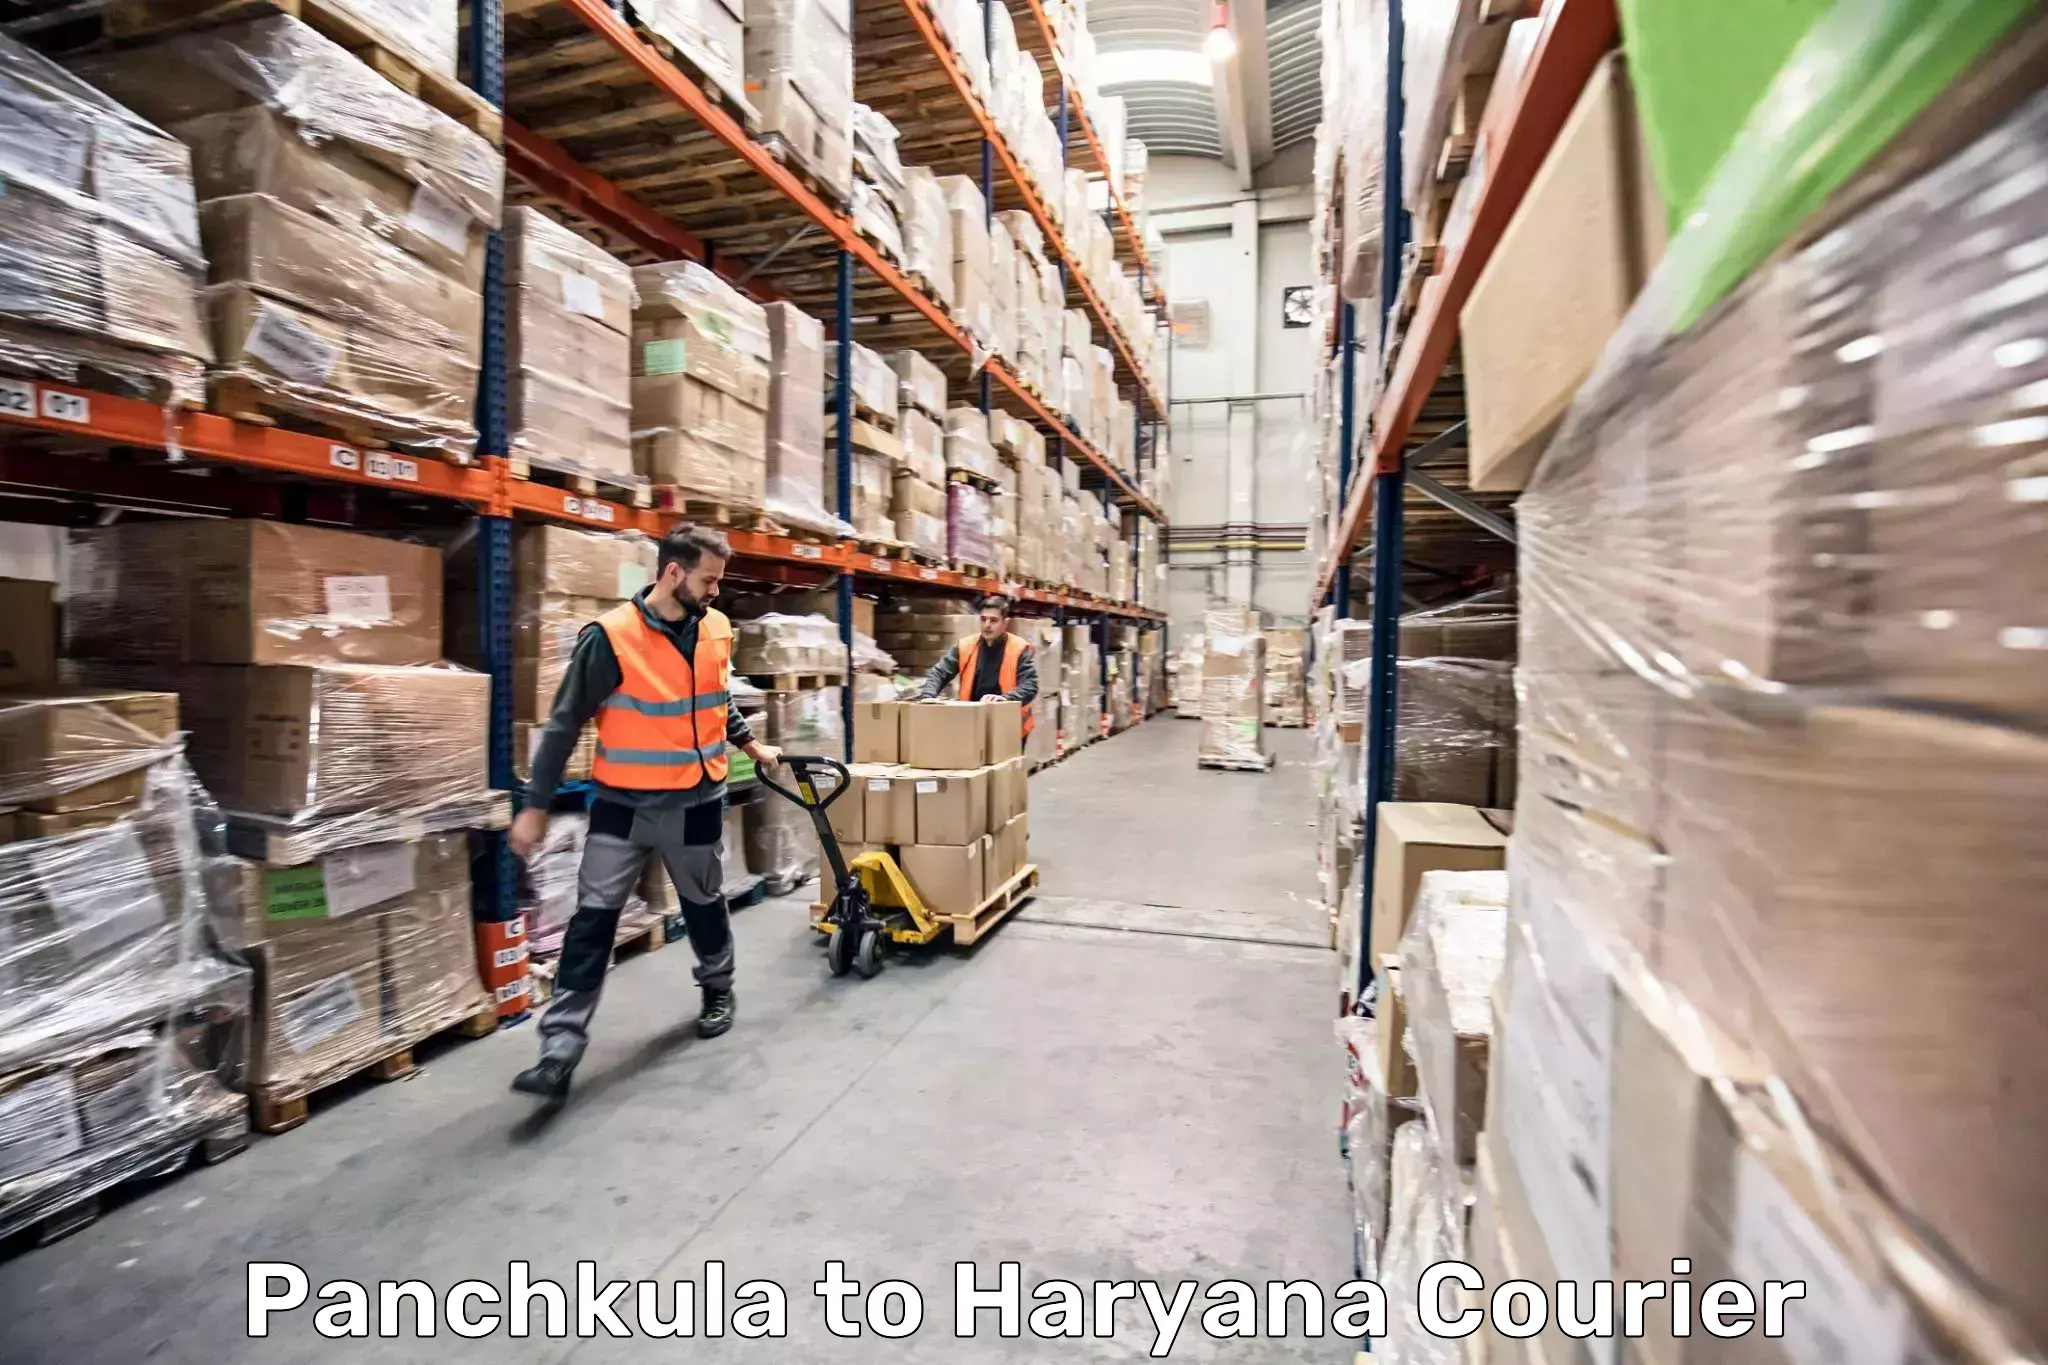 Luggage delivery app Panchkula to Panchkula